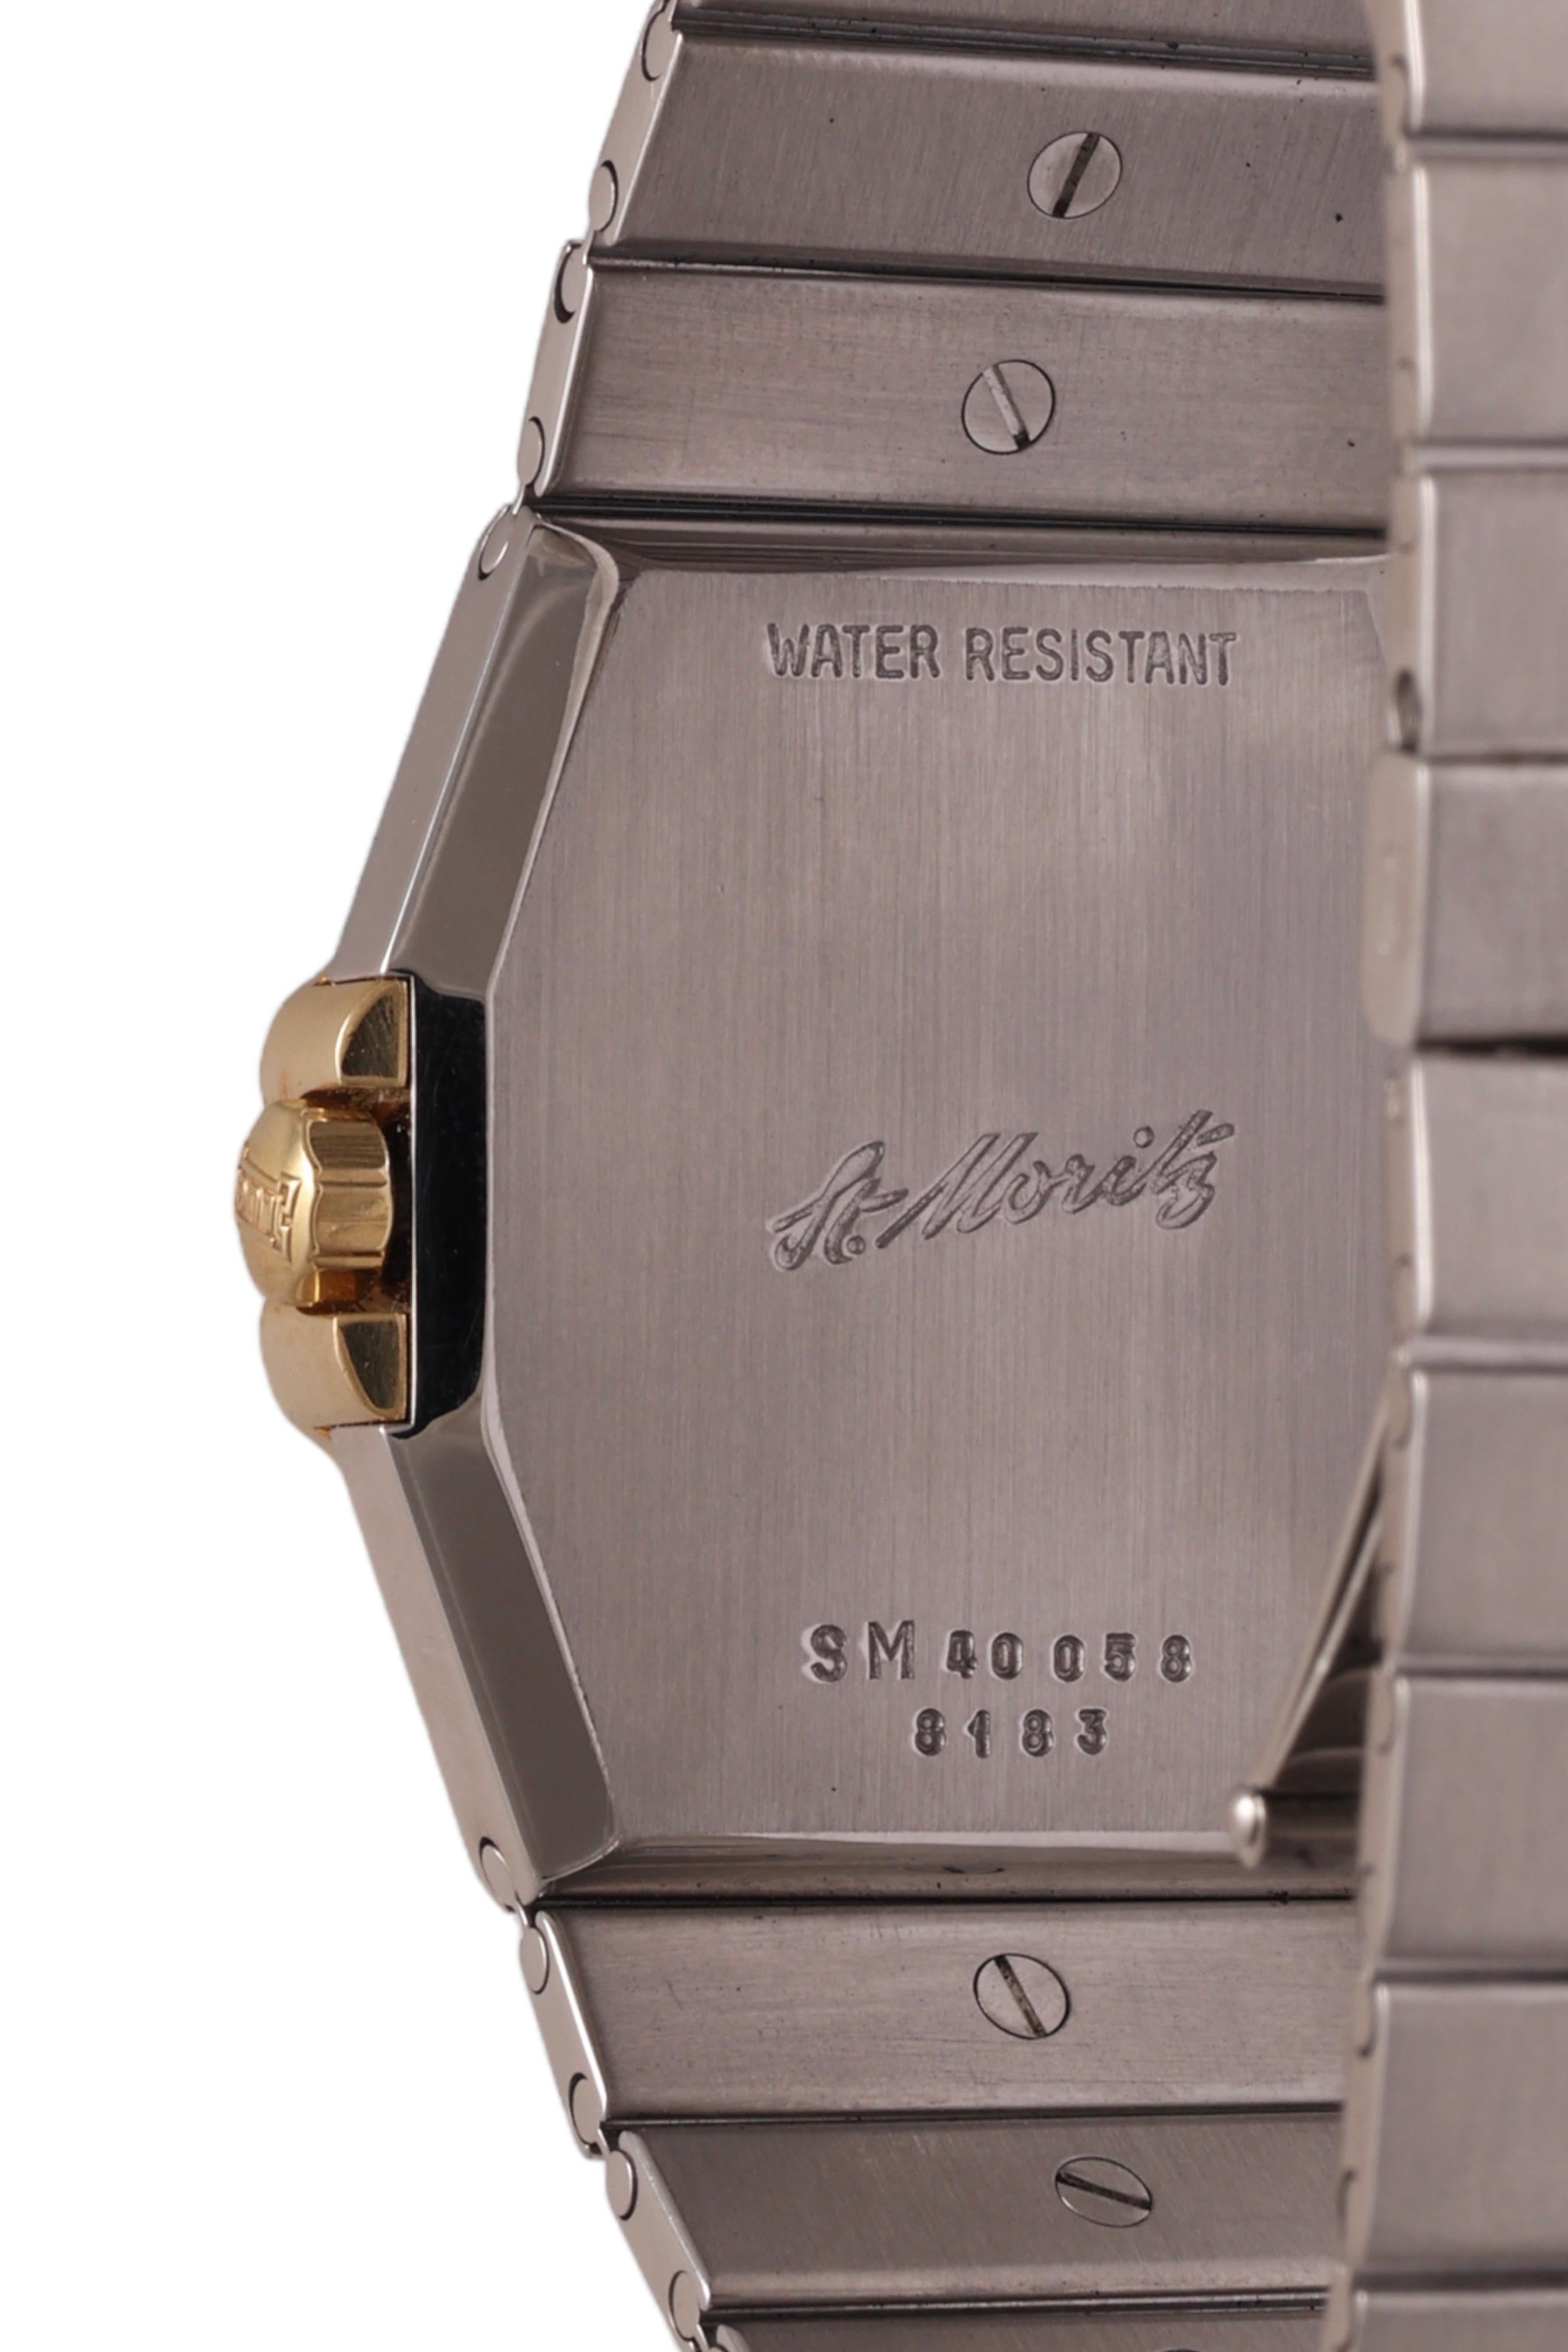 Gold & Steel Chopard St Moritz Automatic Wrist Watch For Sale 3